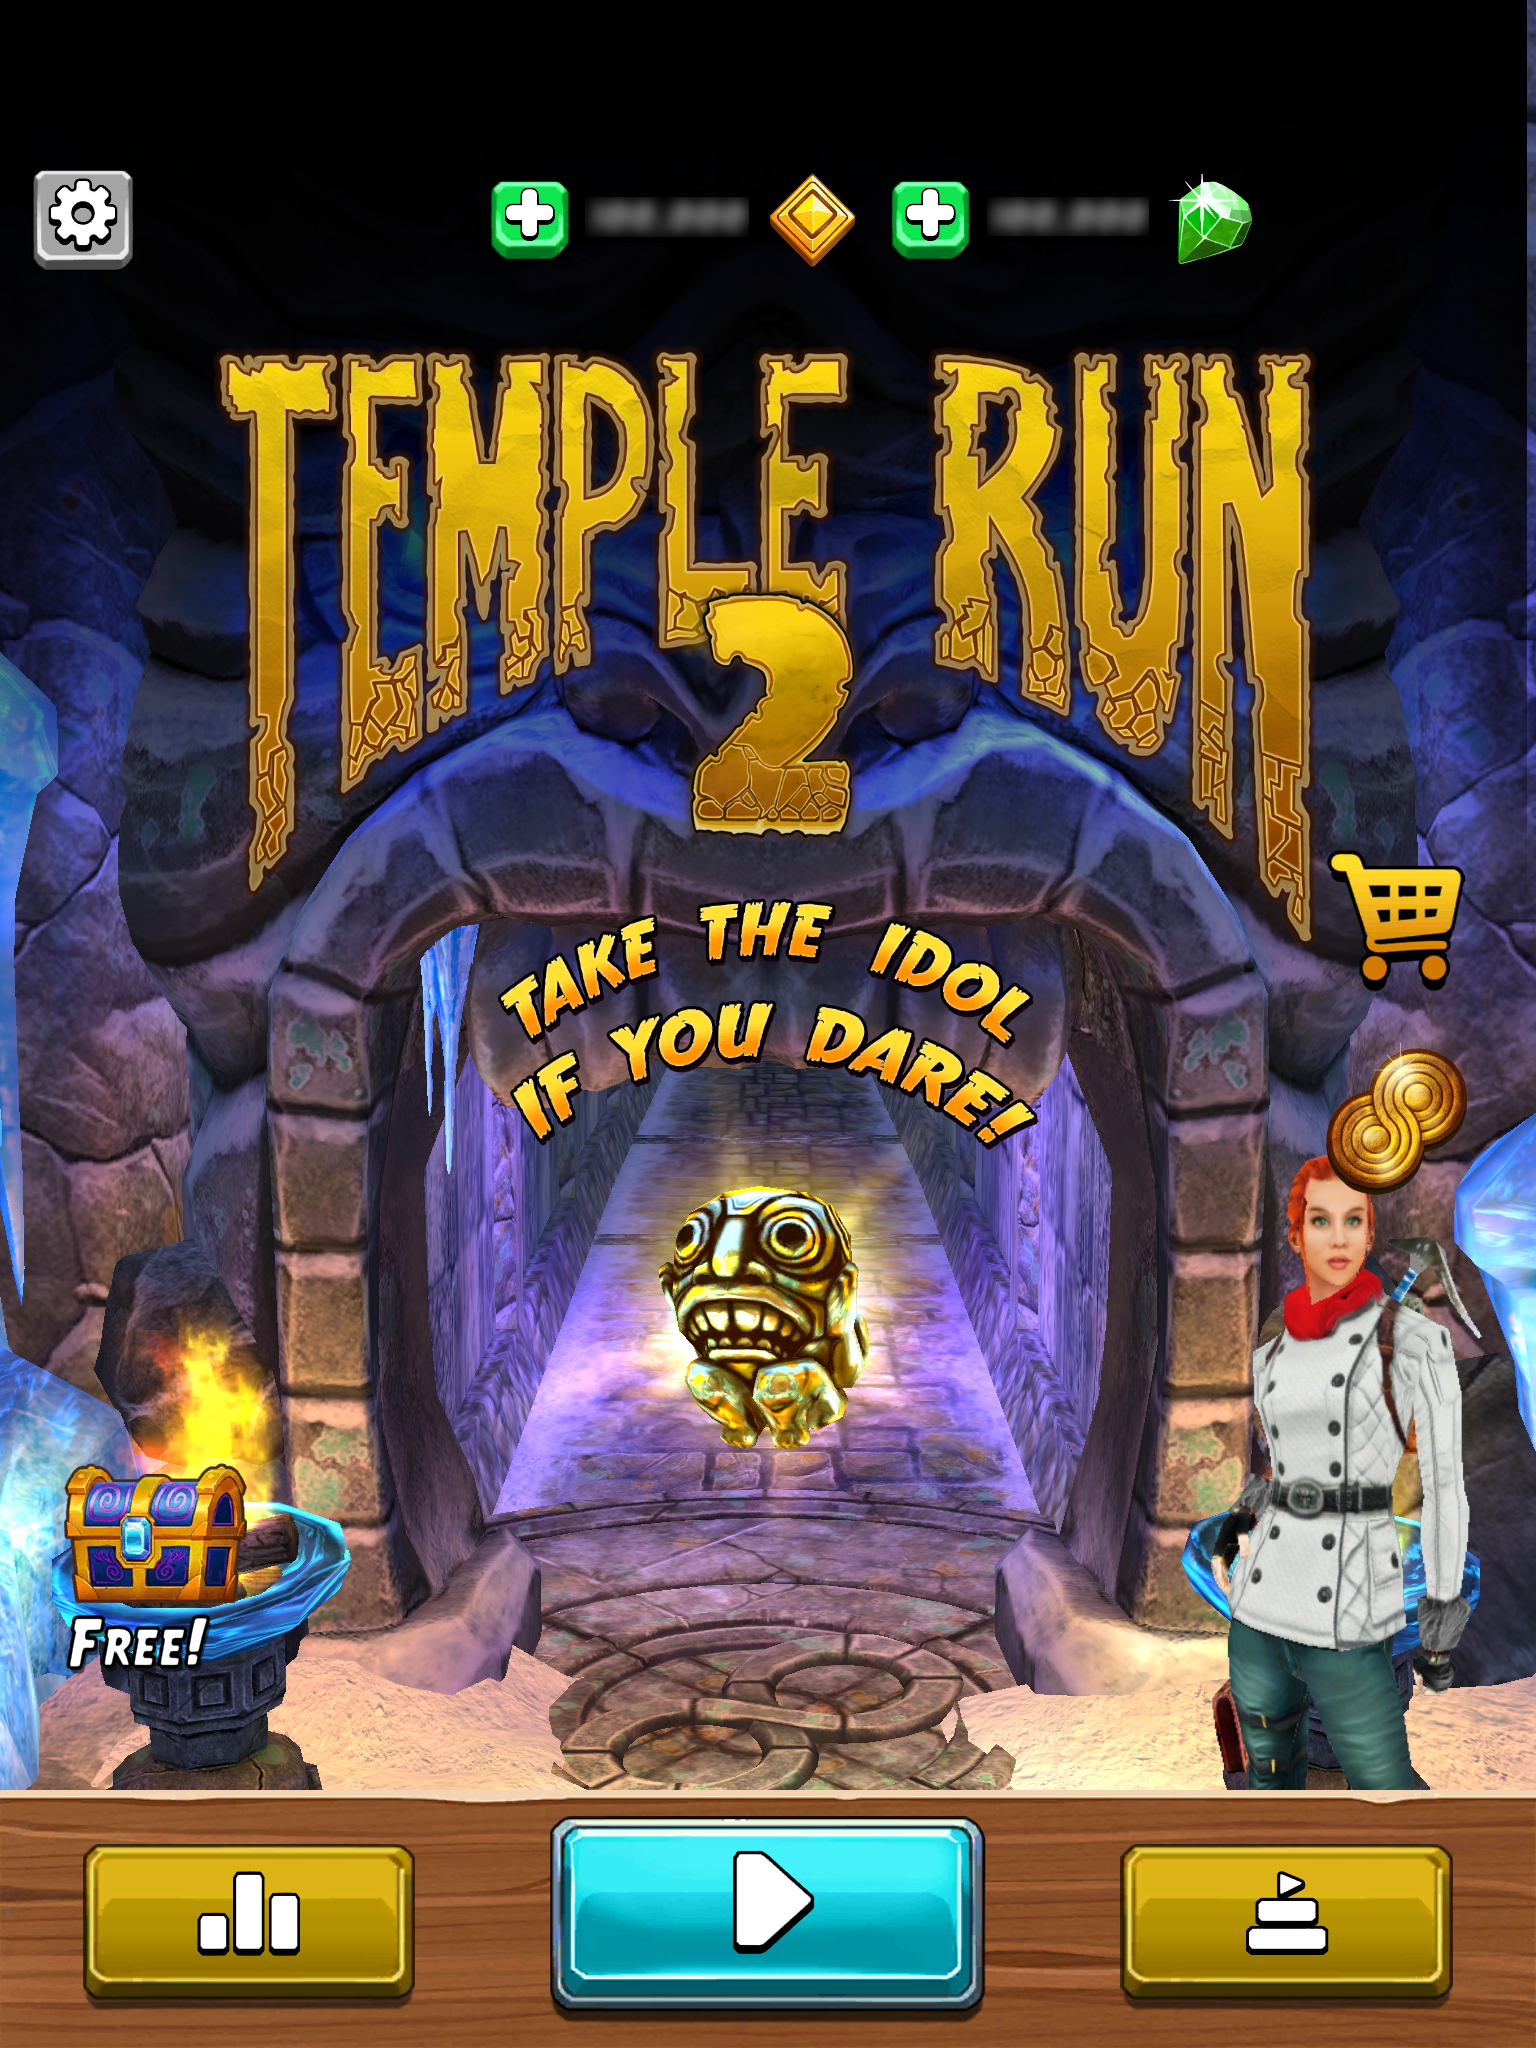 temple run 2 frozen shadows will not load